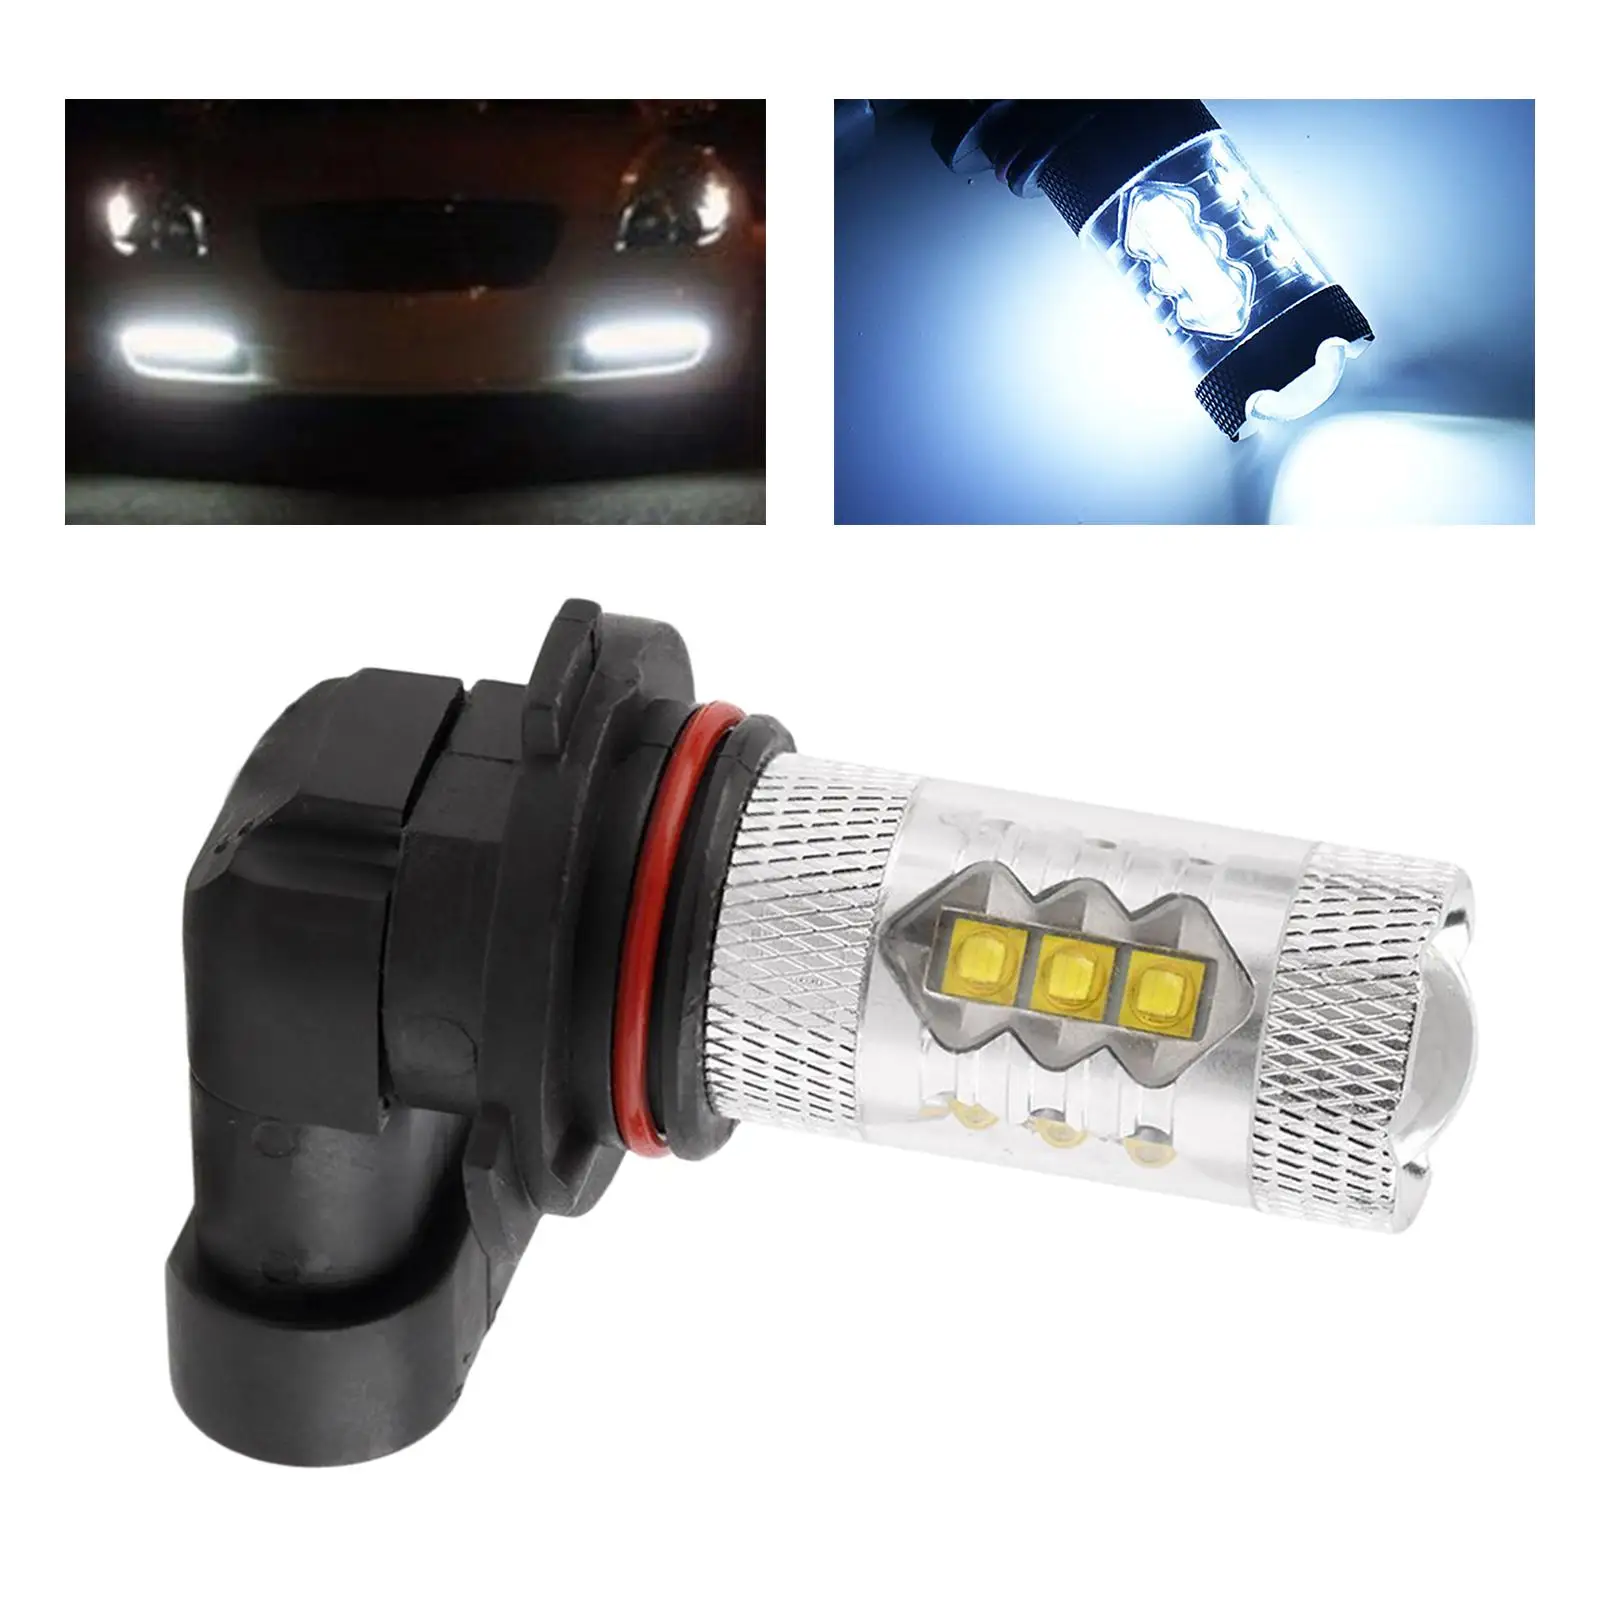 HB4 9006 Fog Lights 80W IP67 Waterproof Replacement Universal Driving Signal Bulbs Headlight Fog Lamps Bulbs for Car Truck